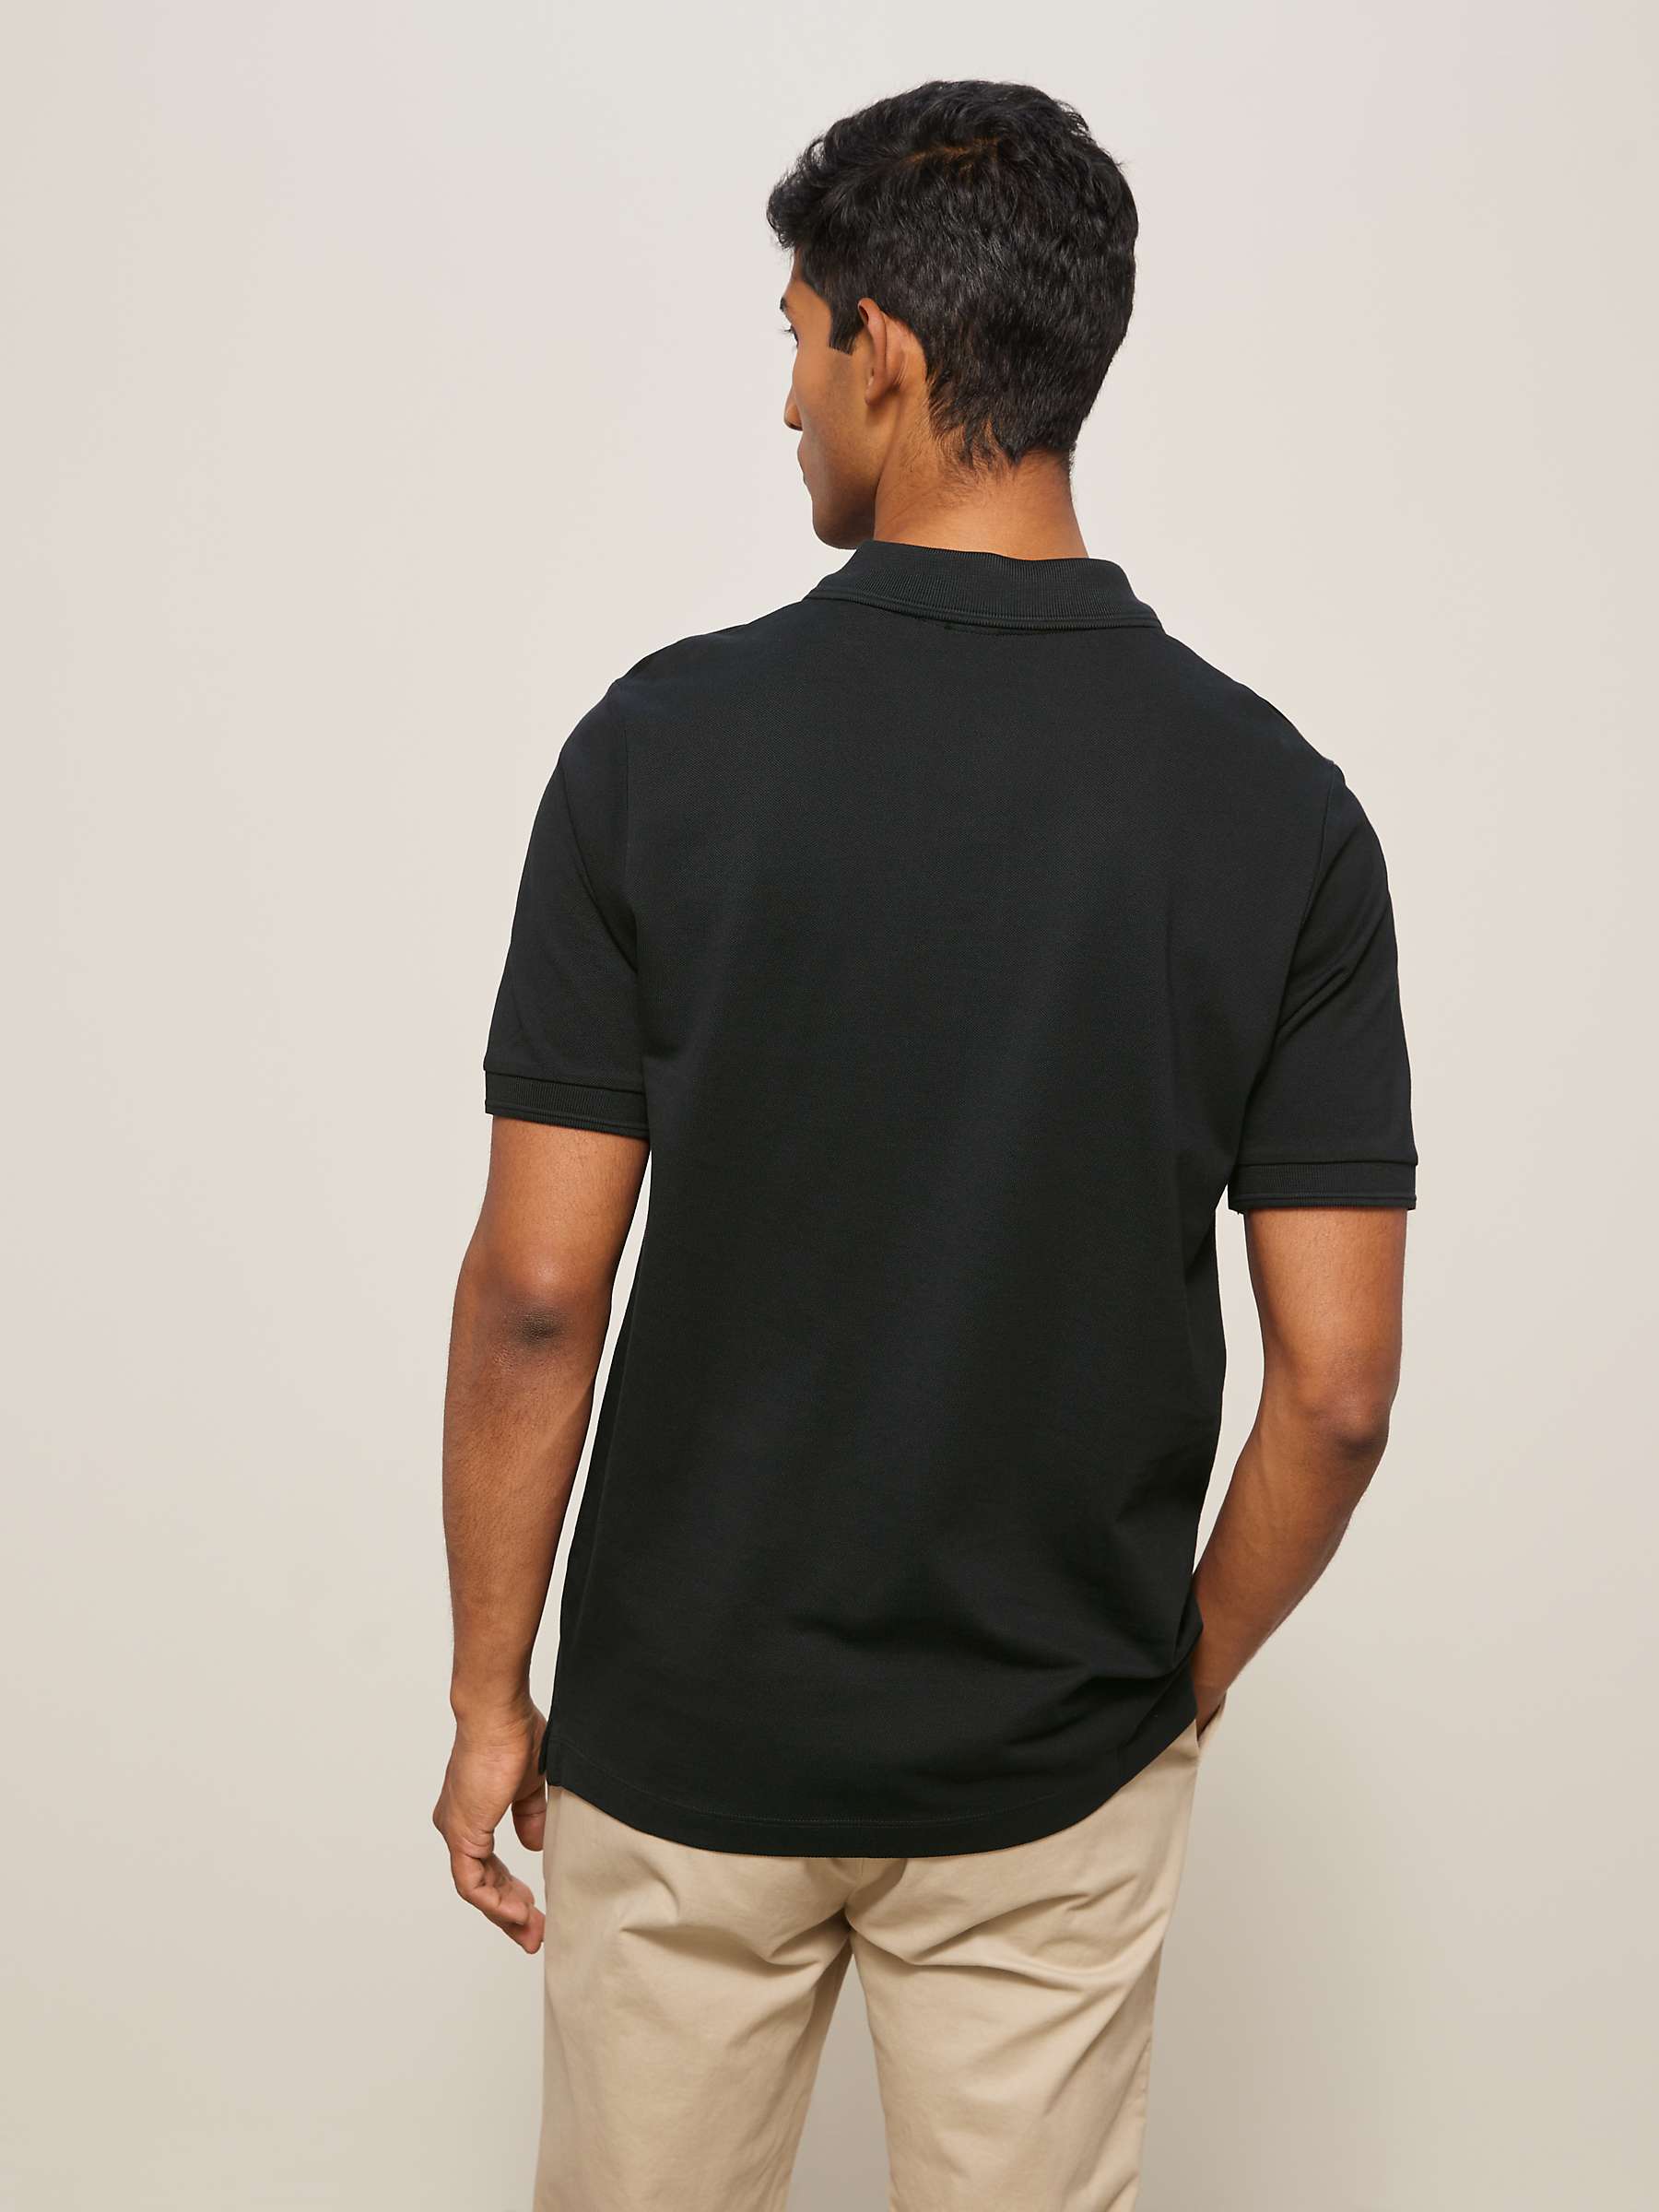 Buy John Lewis Supima Cotton Jersey Polo Shirt Online at johnlewis.com